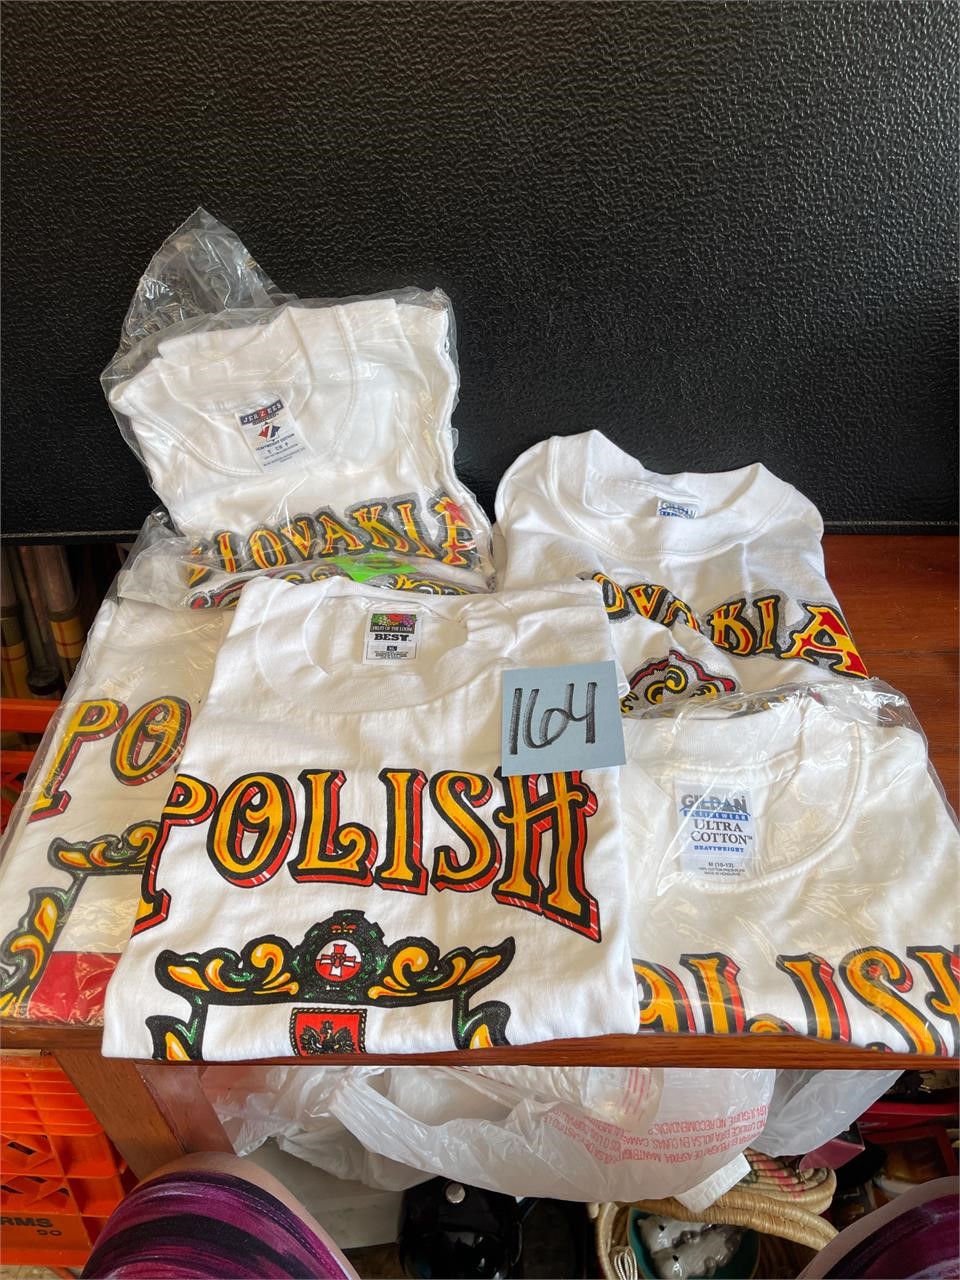 New Polish & Slovakia t-shirts assorted sizes